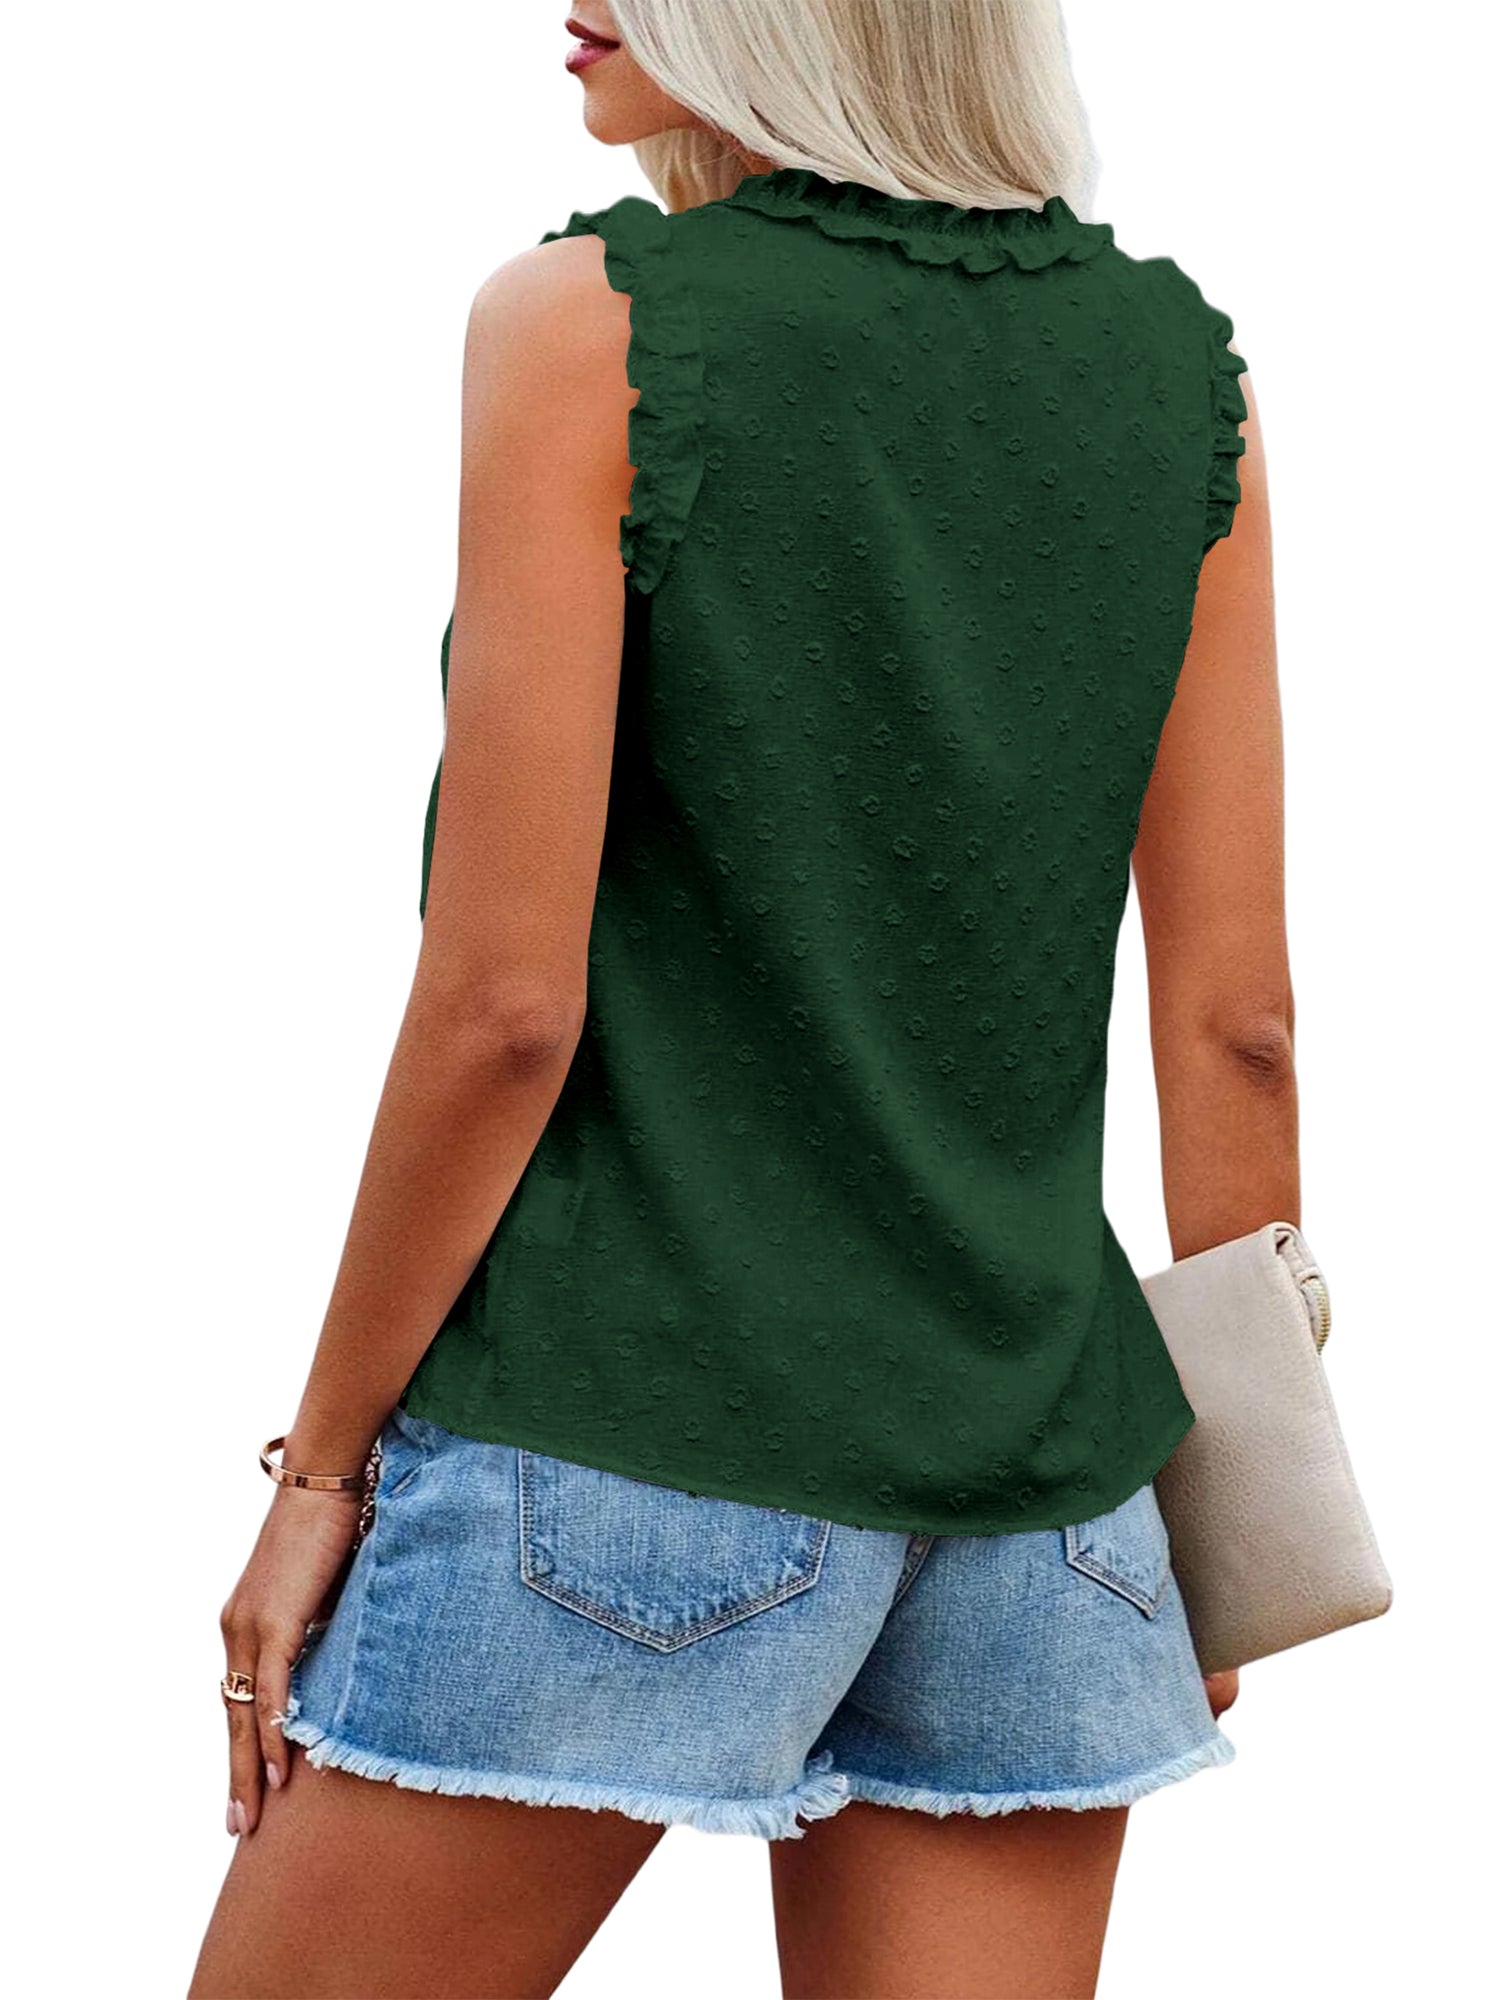 「lovevop」Women's Tank Top Summer Fashion Dot Sleeveless Business Chiffon Ruffle V Neck Casual Cami Top